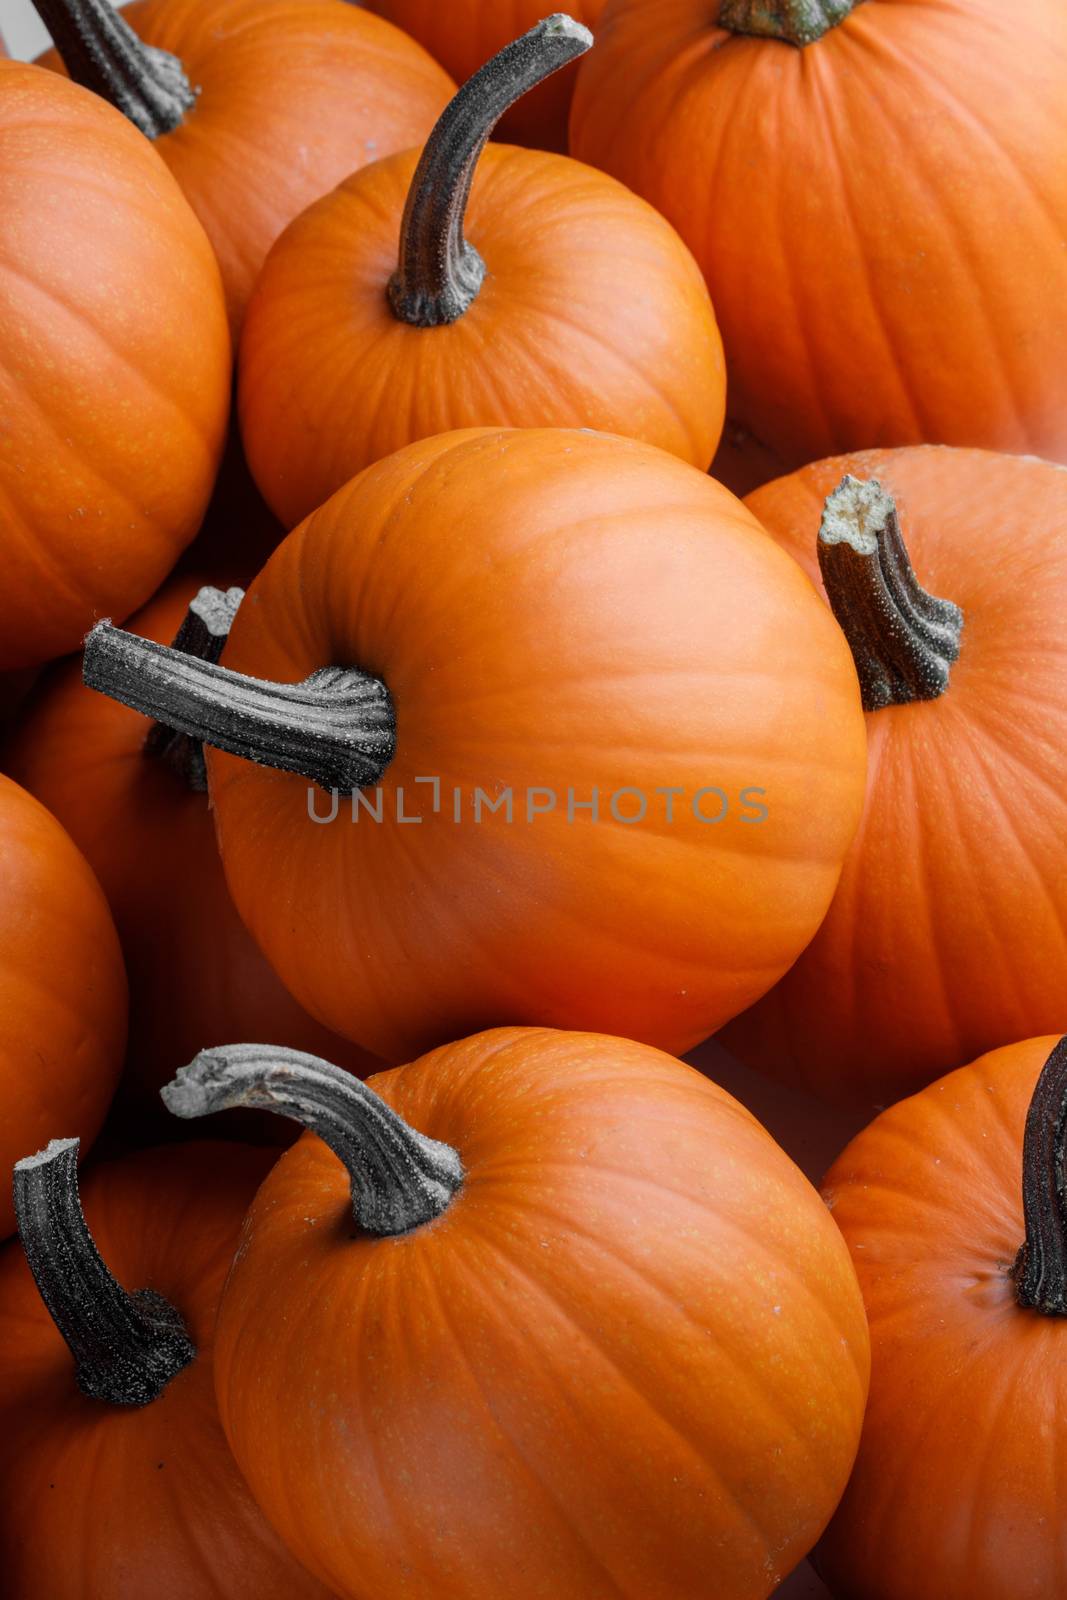 Many orange pumpkins background , Halloween holiday concept